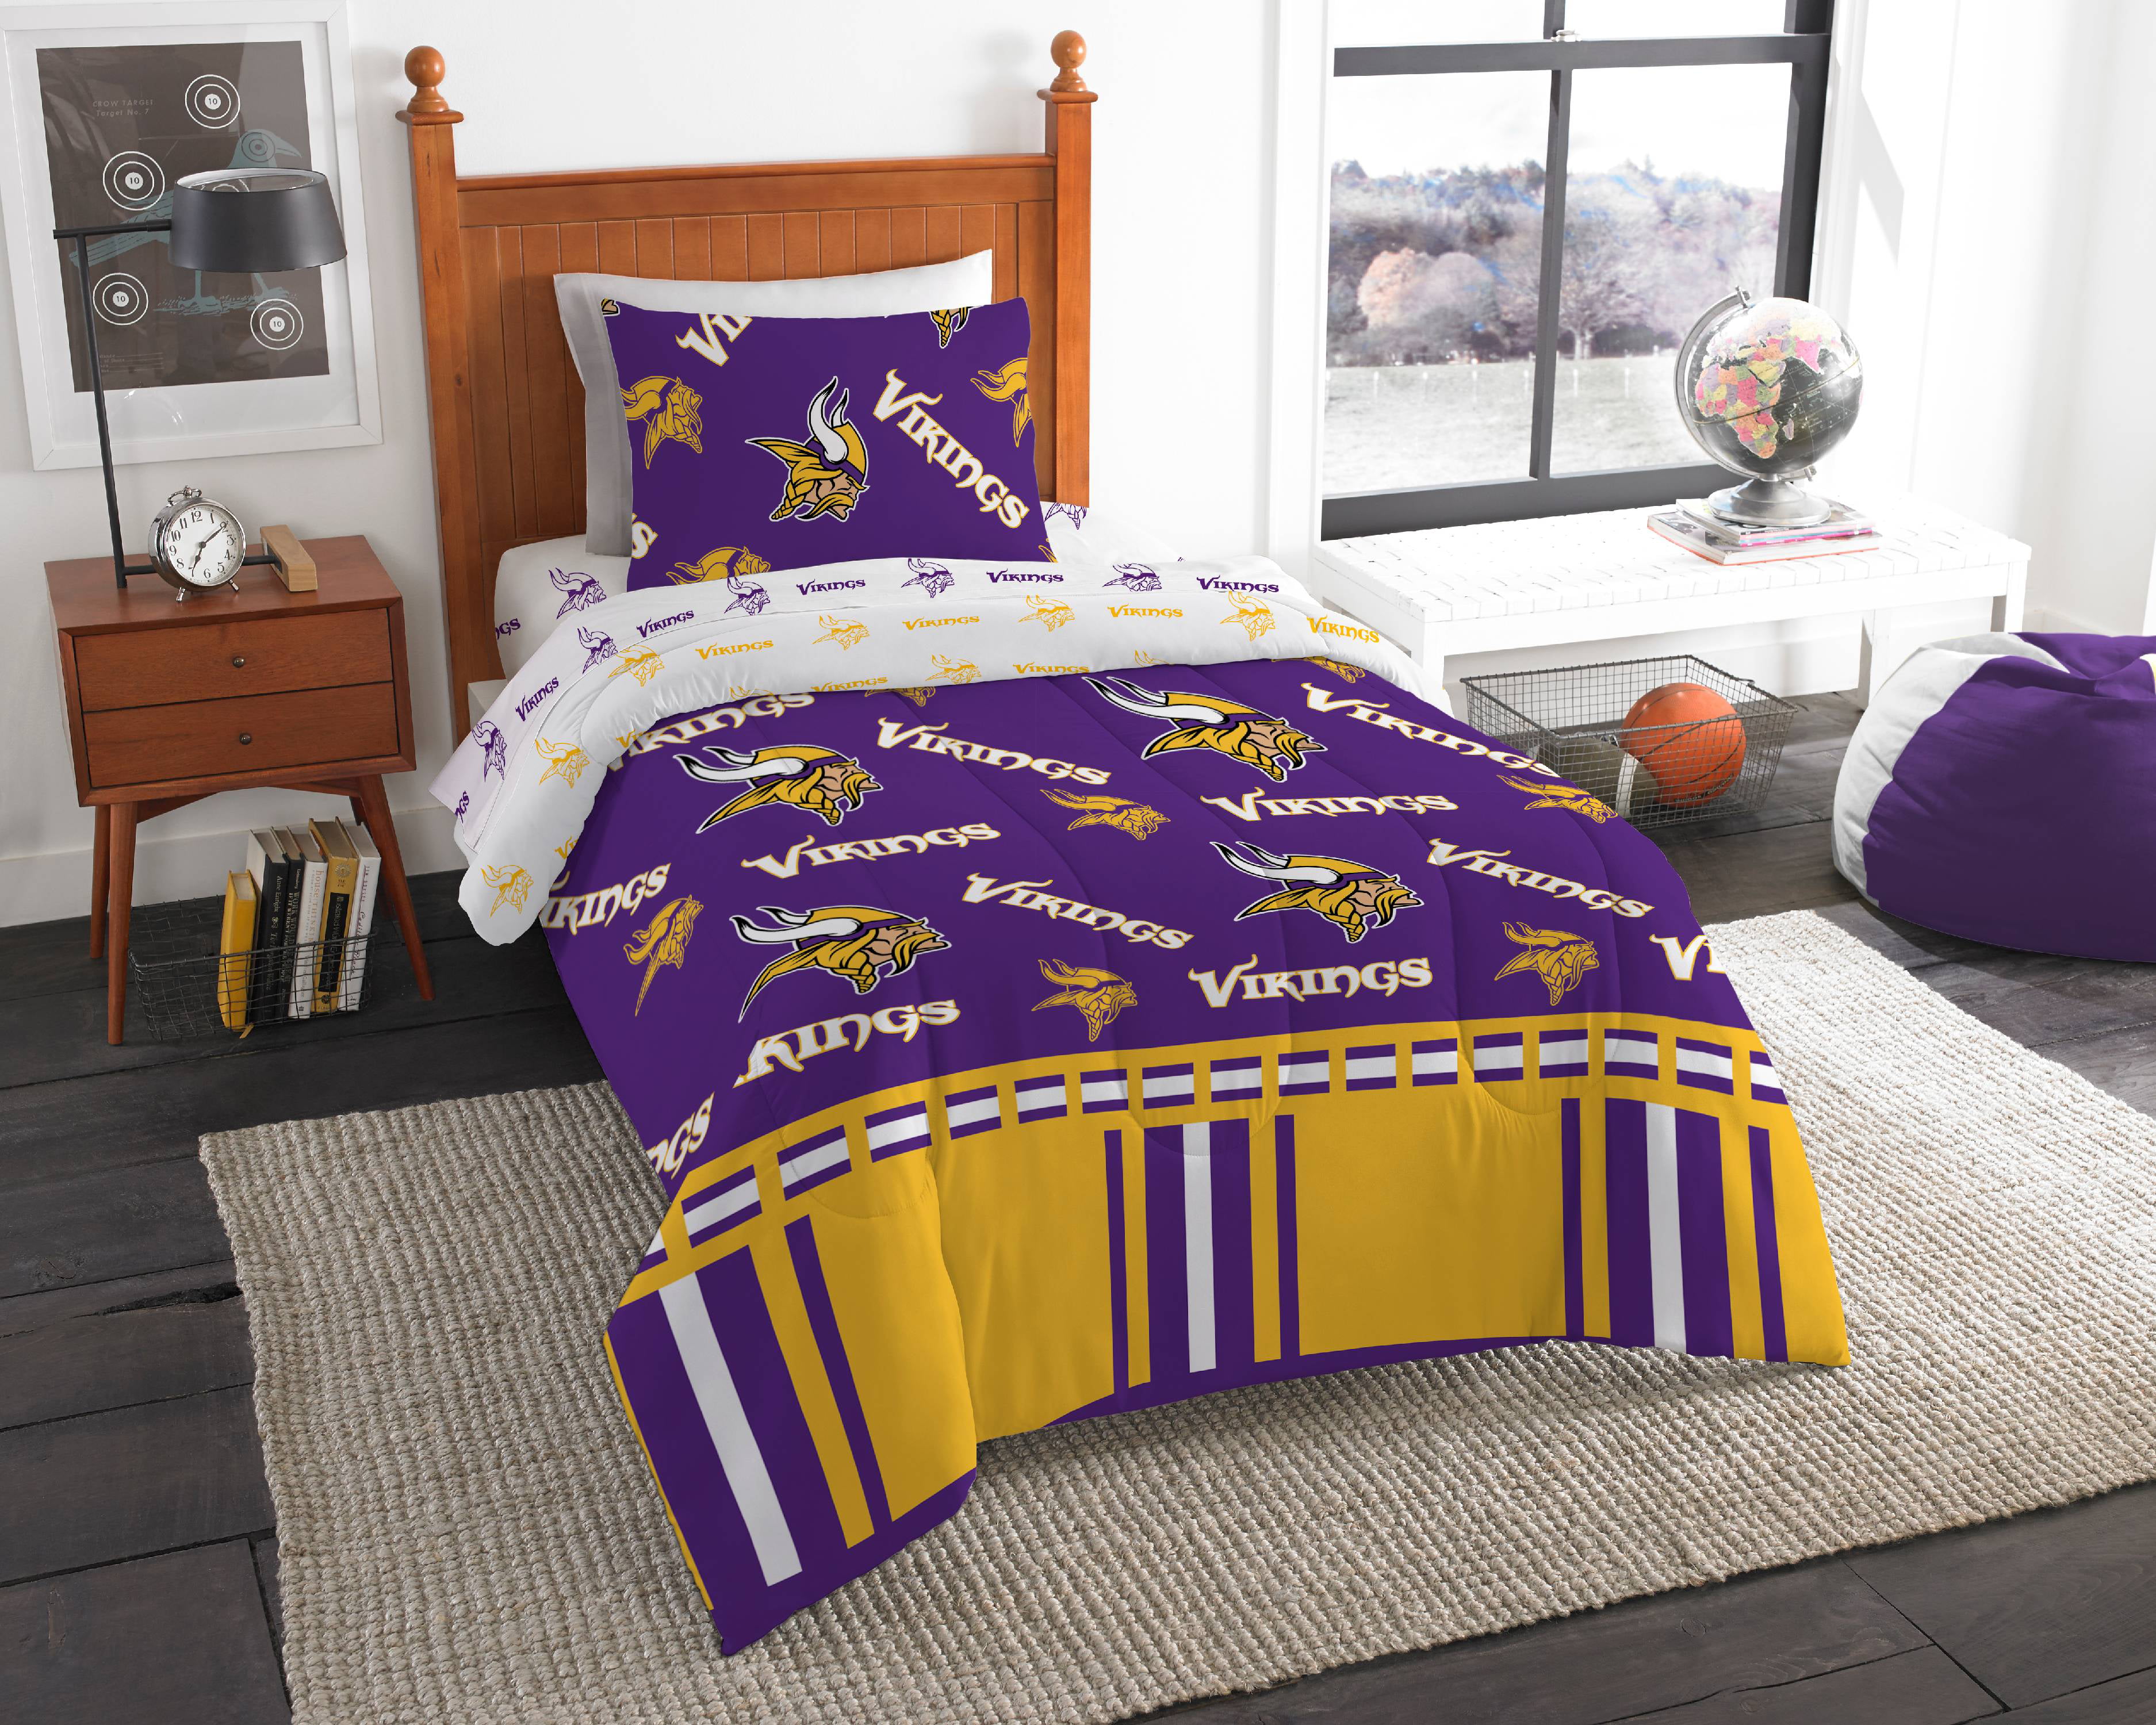 Details about   Minnesota Vikings Football Fitted Sheet 3PCS Bed Sheet & Pillowcase Bedding sets 